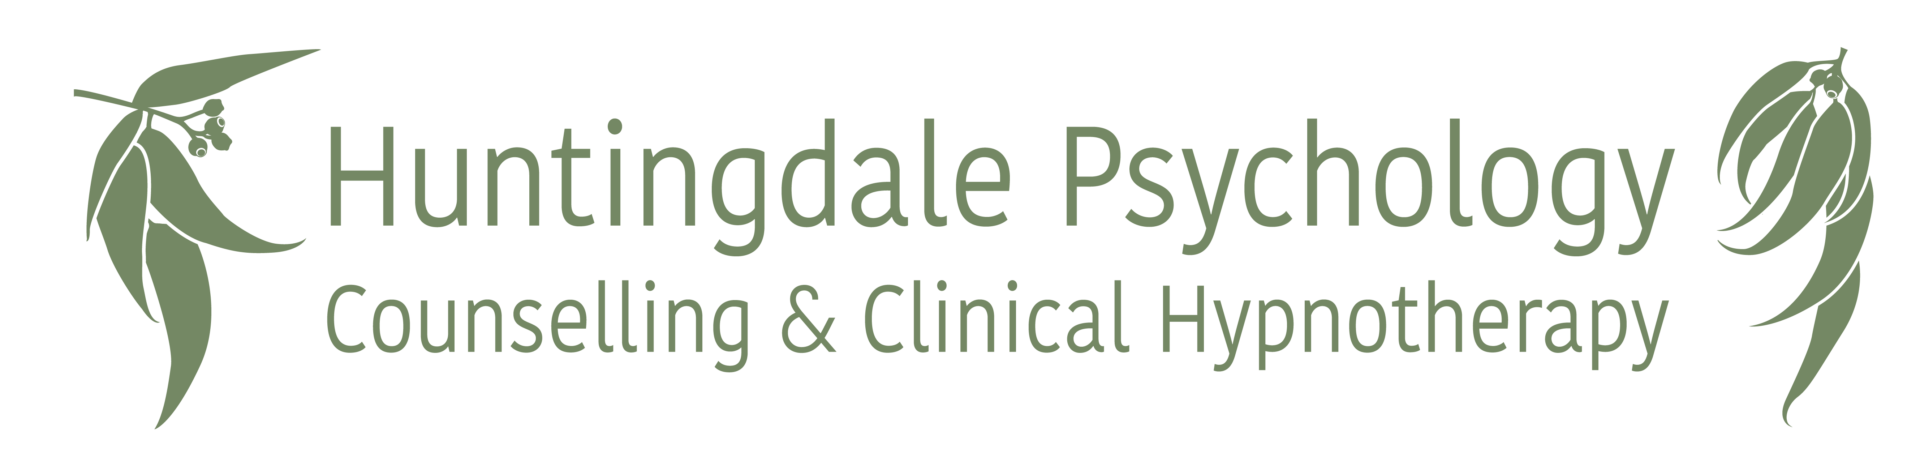 Huntingdale psychology logo